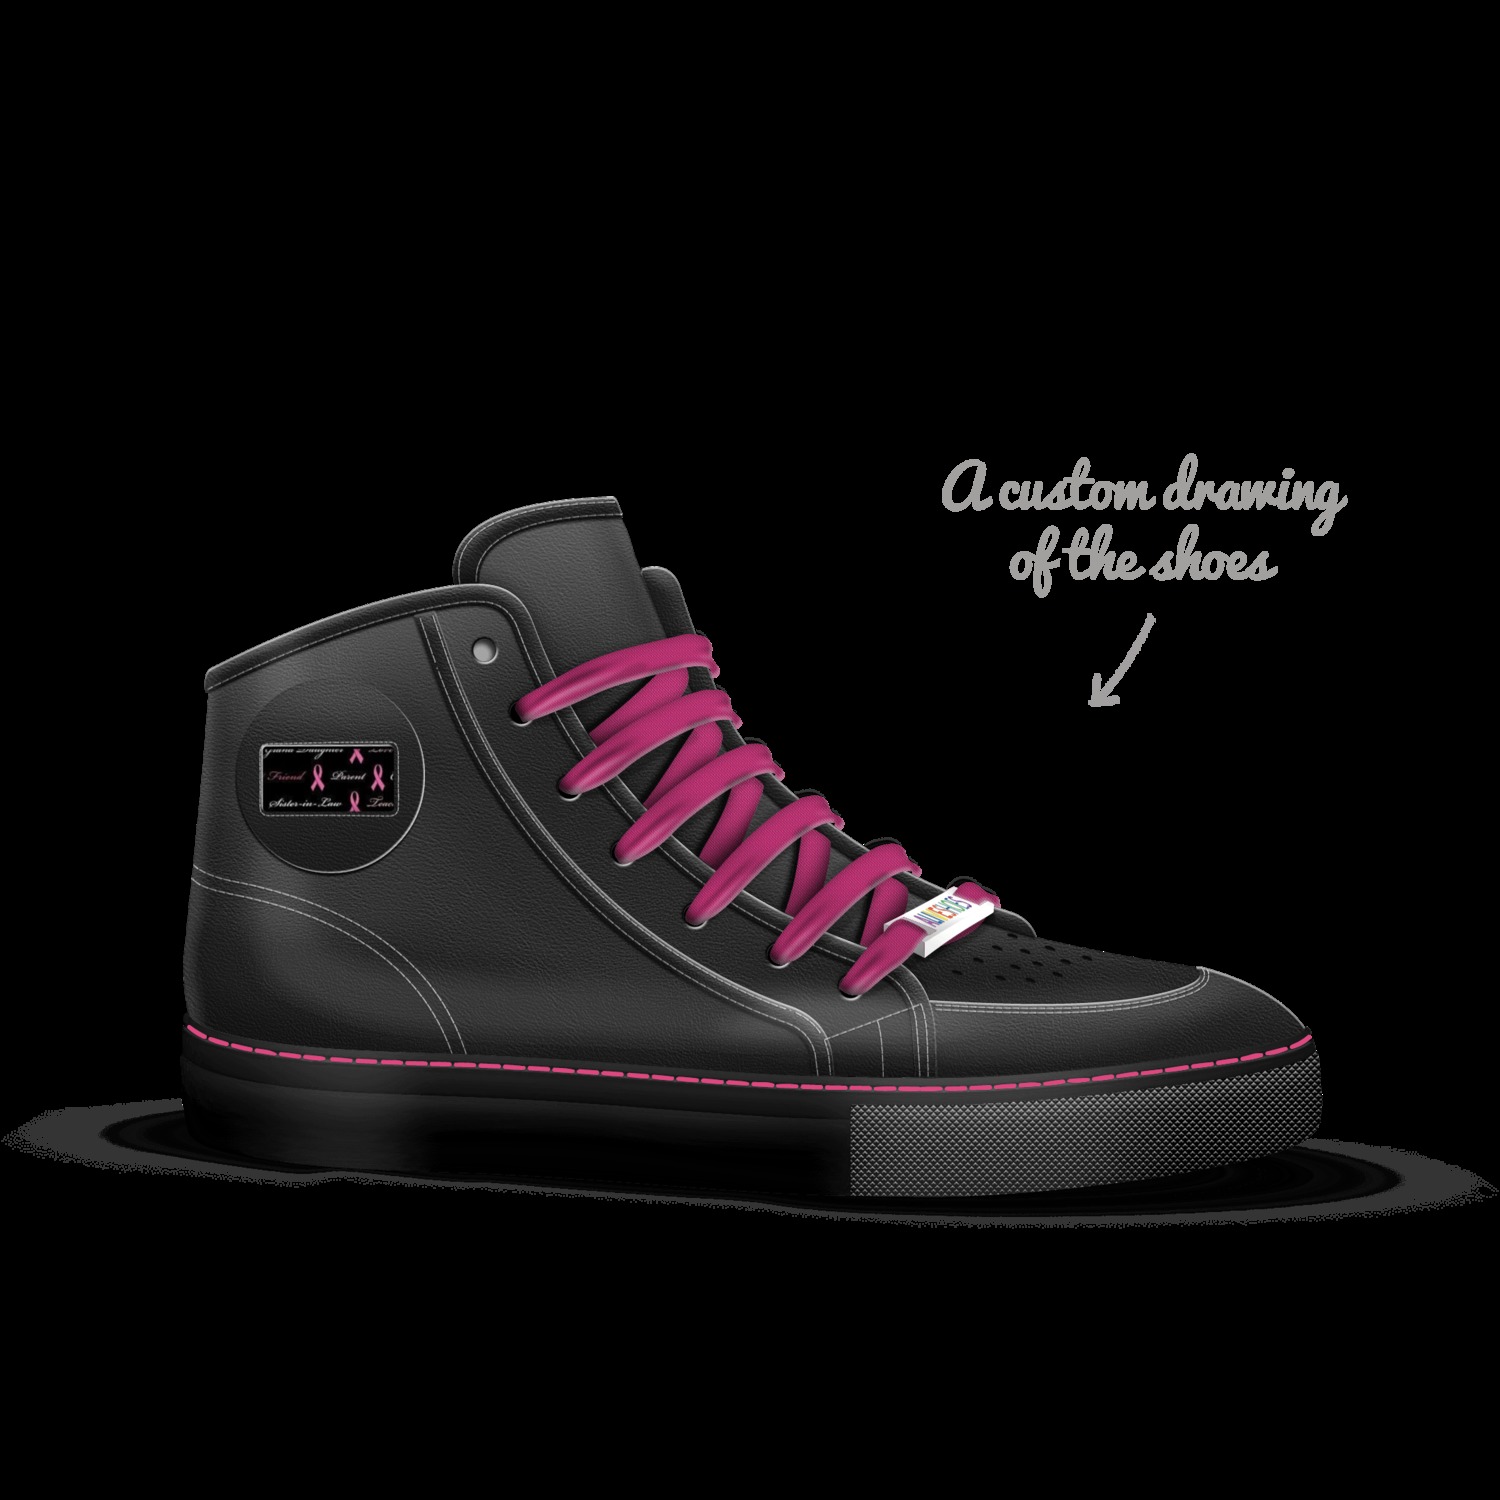 A Custom Shoe concept by Nickey Alvarado